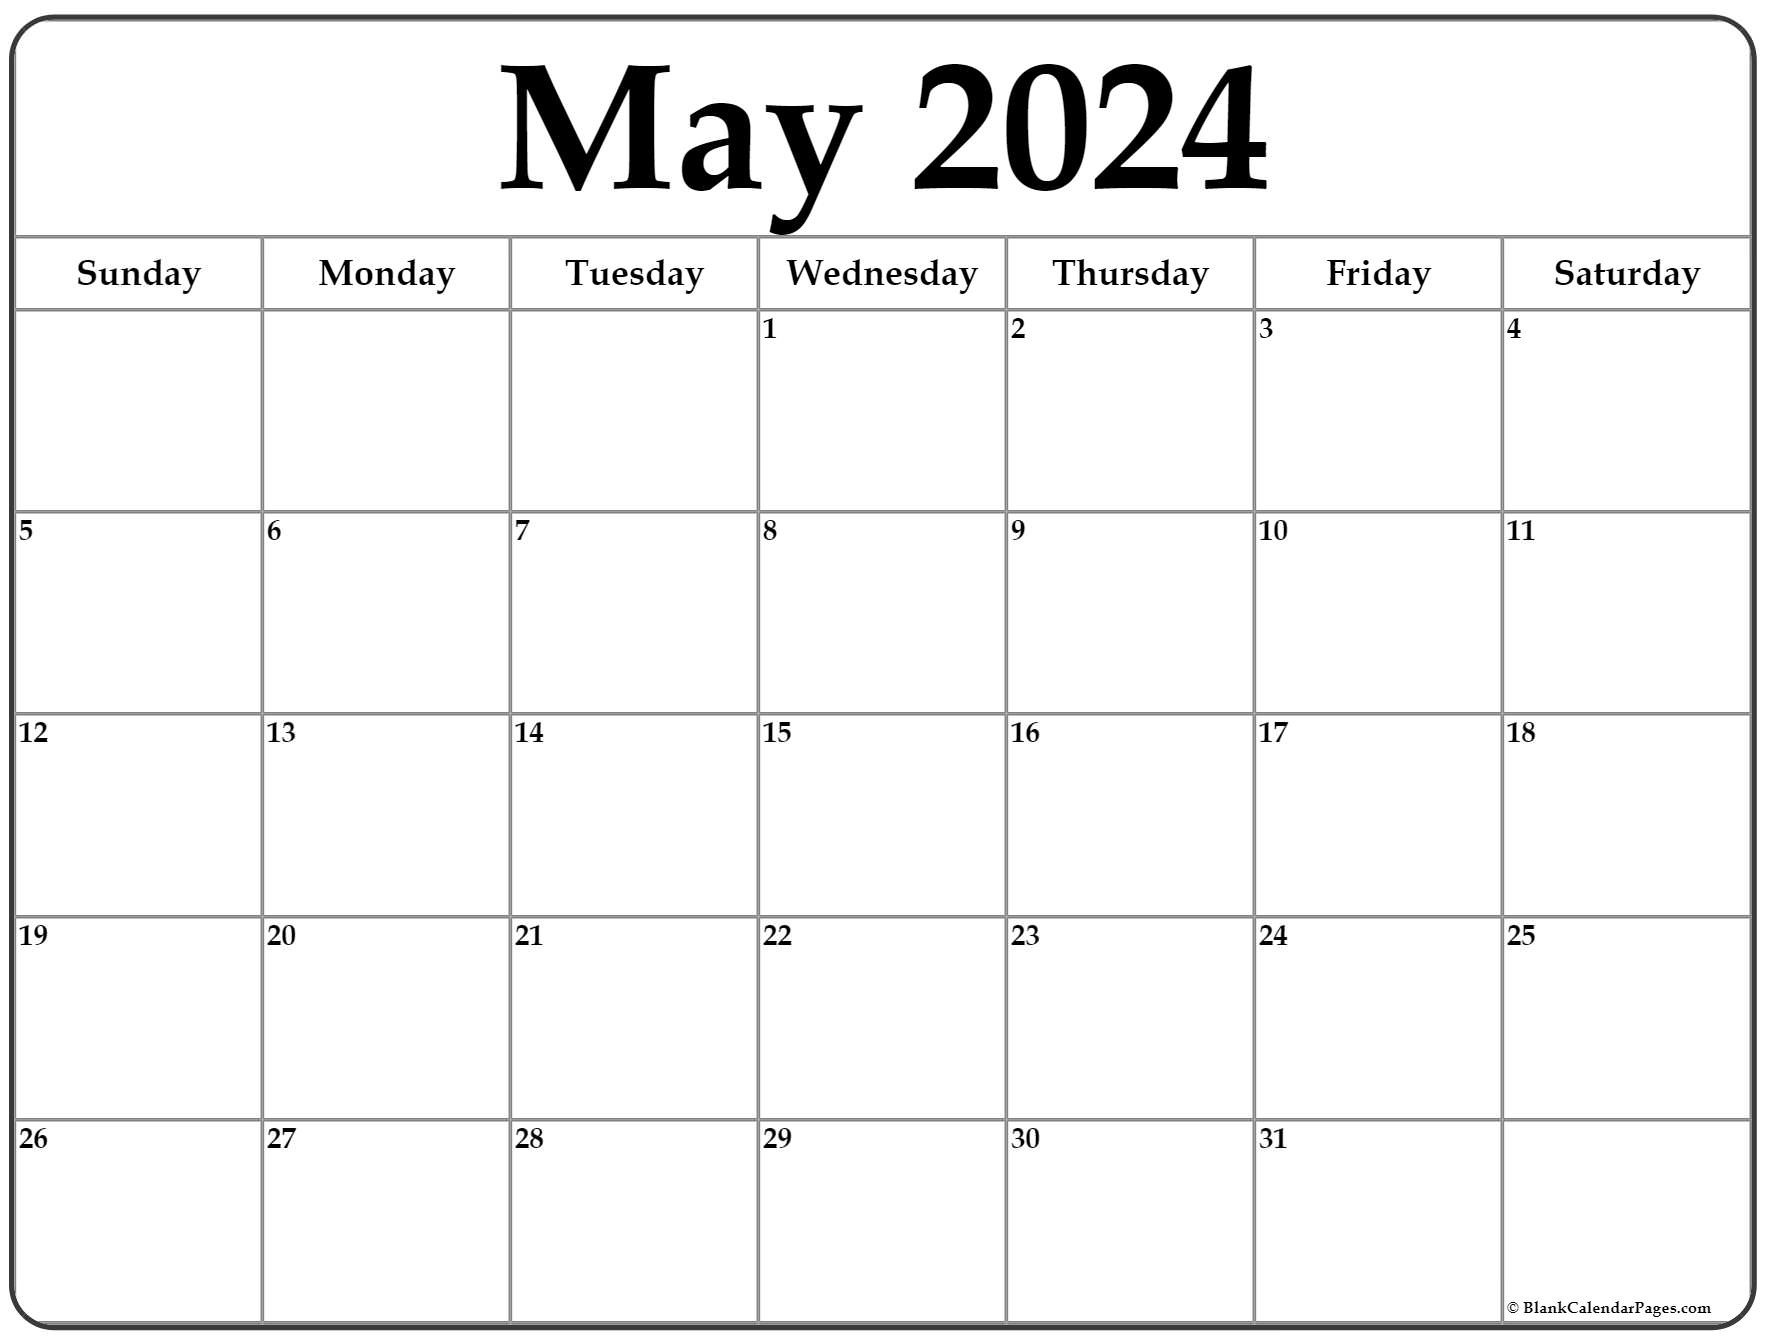 May 2024 Calendar | Free Printable Calendar for Printable May Calendar 2024 Free